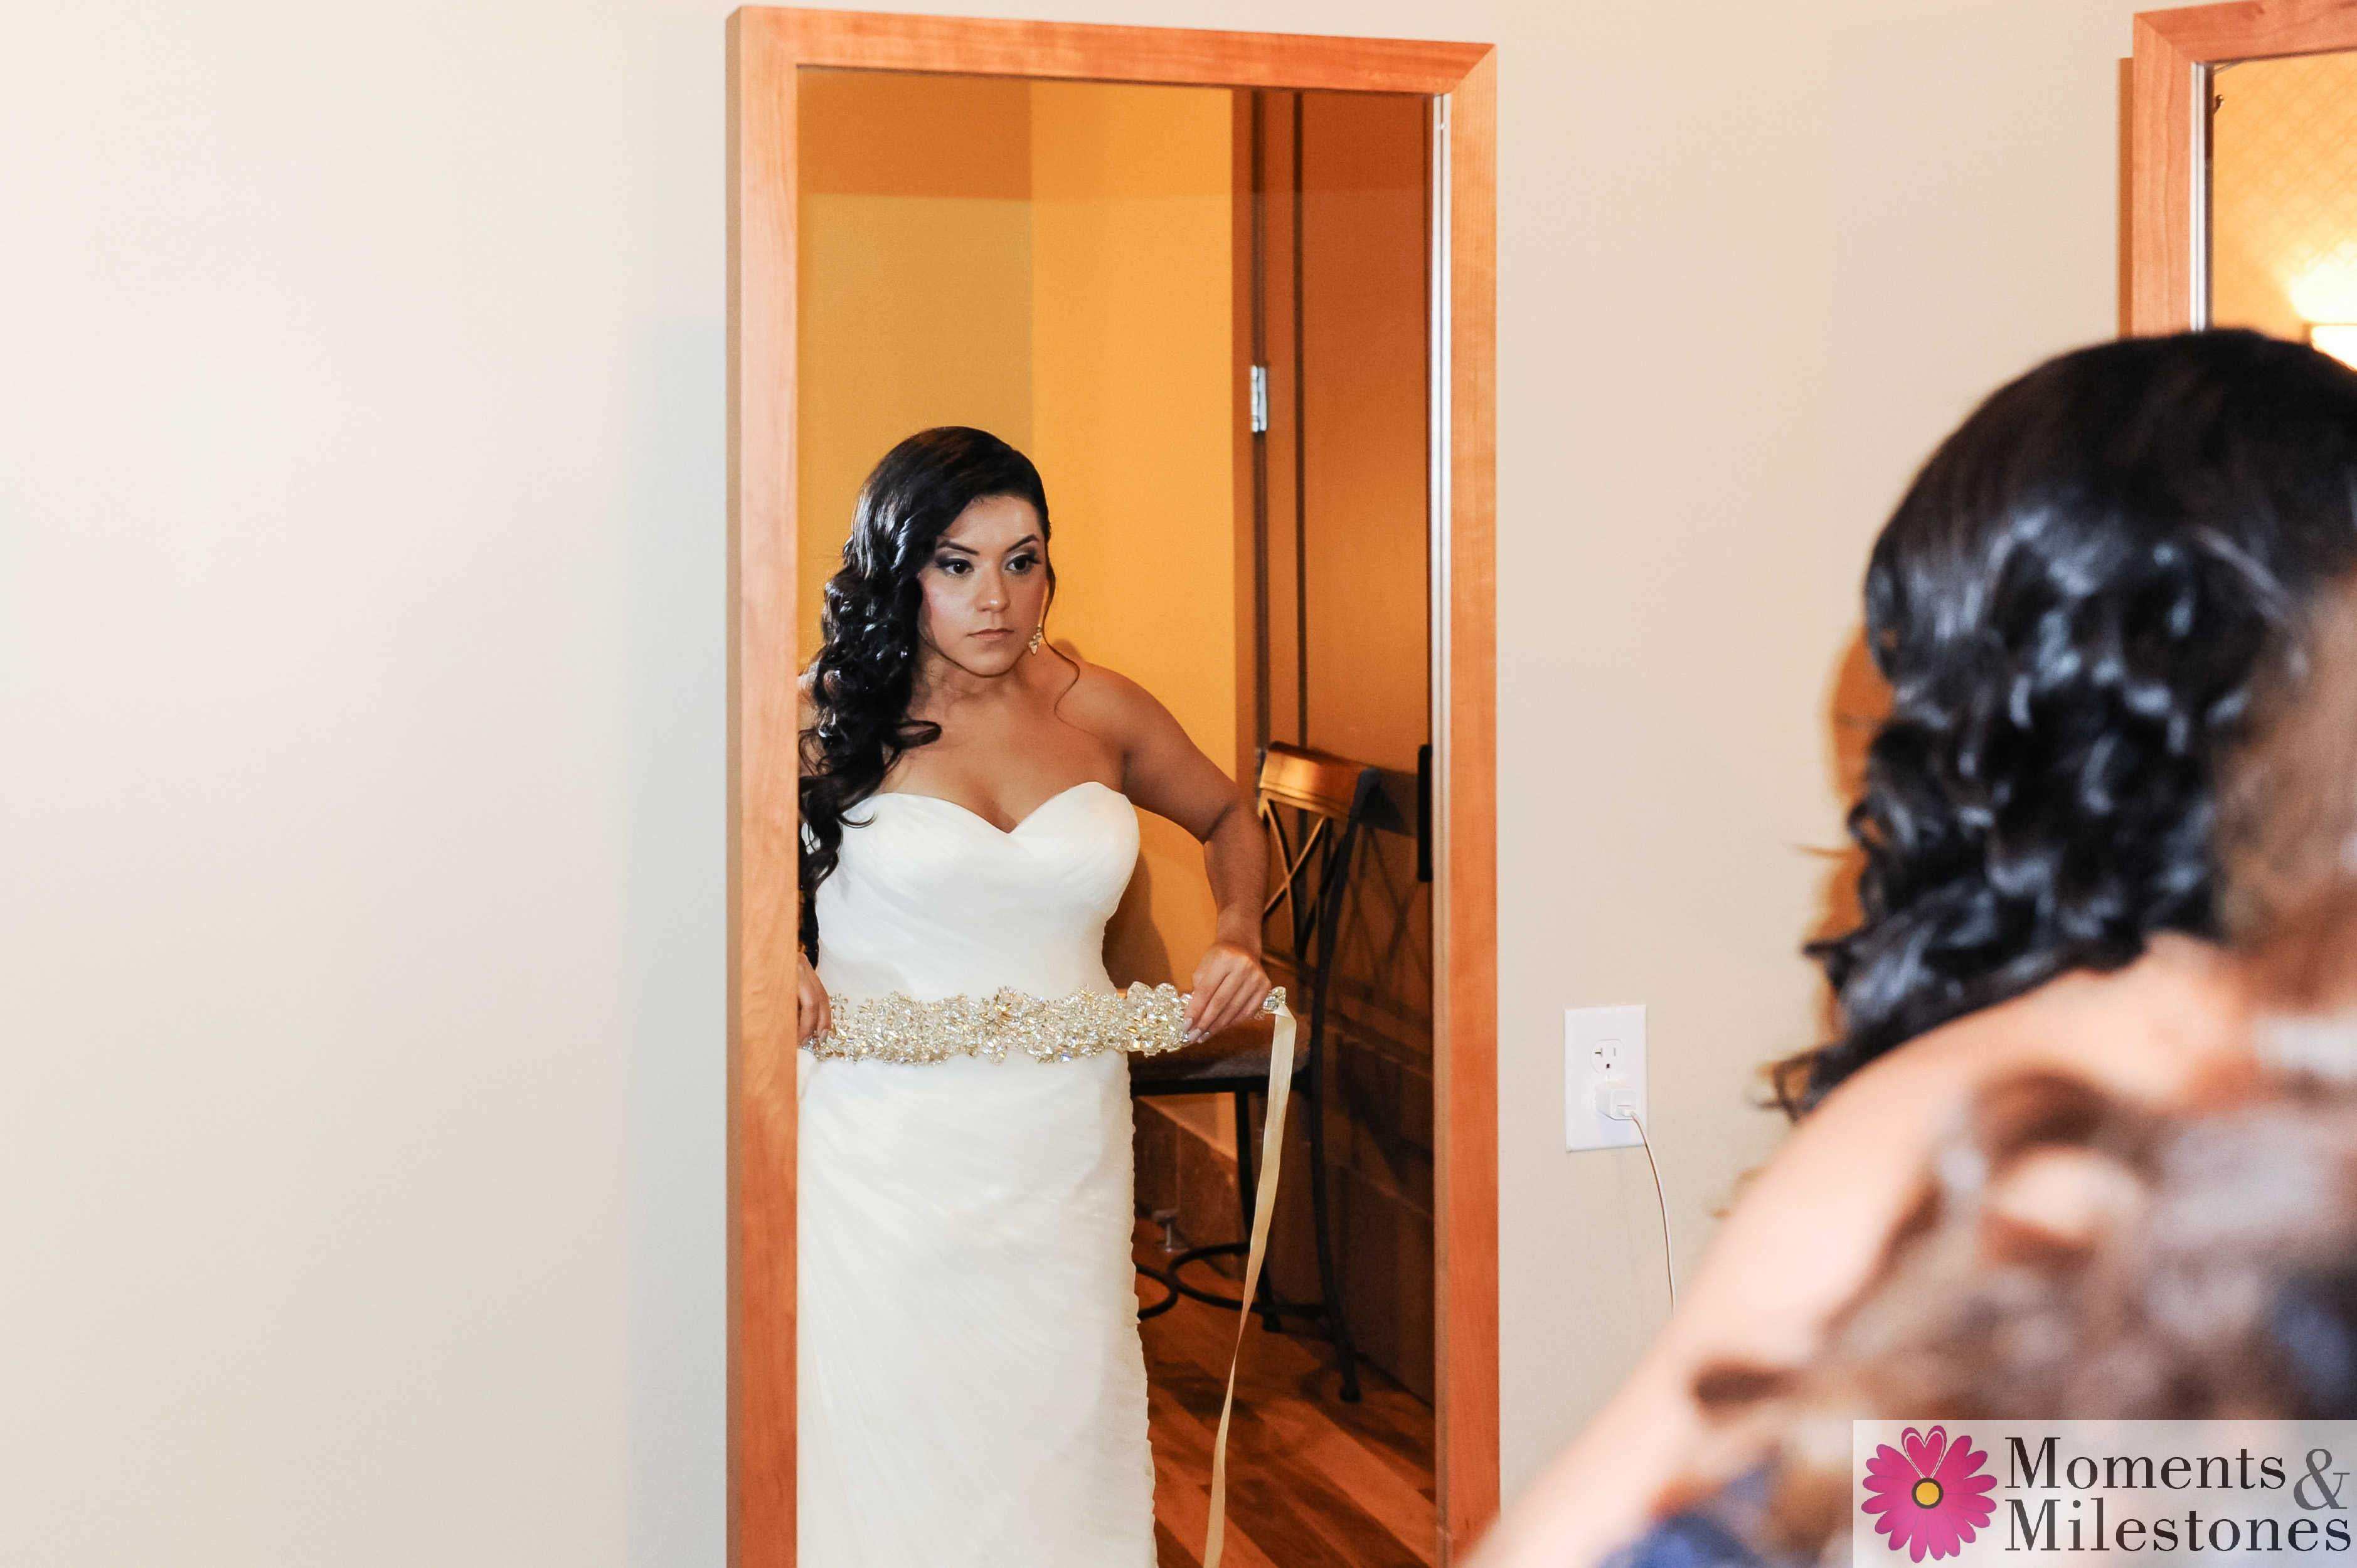 San Antonio NOAH'S Event Venue Wedding Planning and Wedding Photography